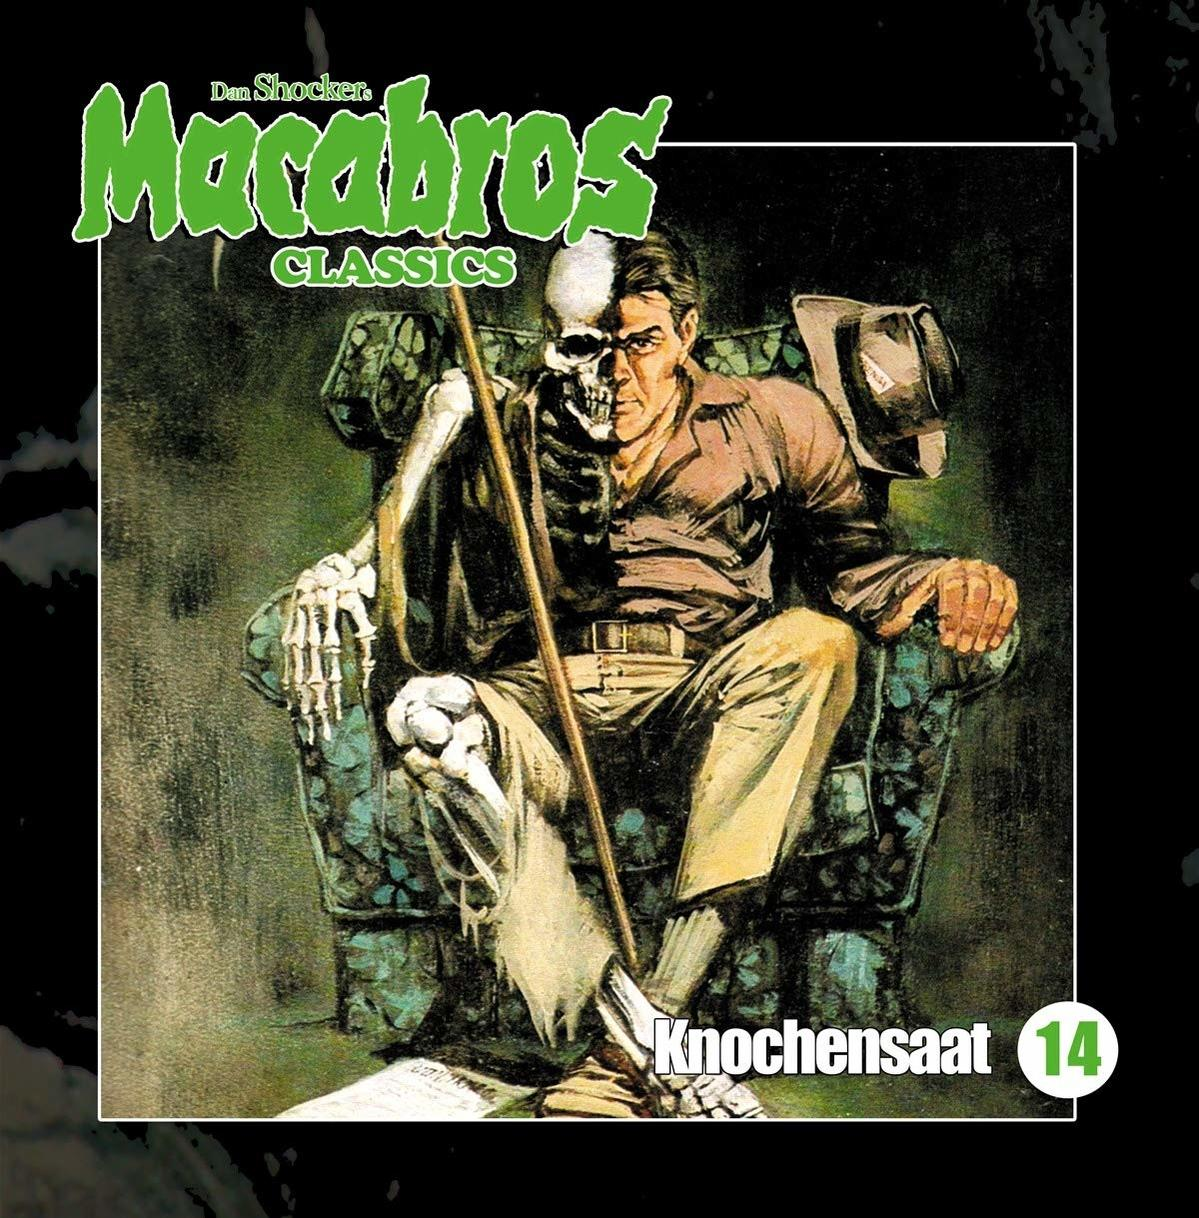 Macabros (CD) - Dan Knochensaat - Shocker 14 Folge Classics